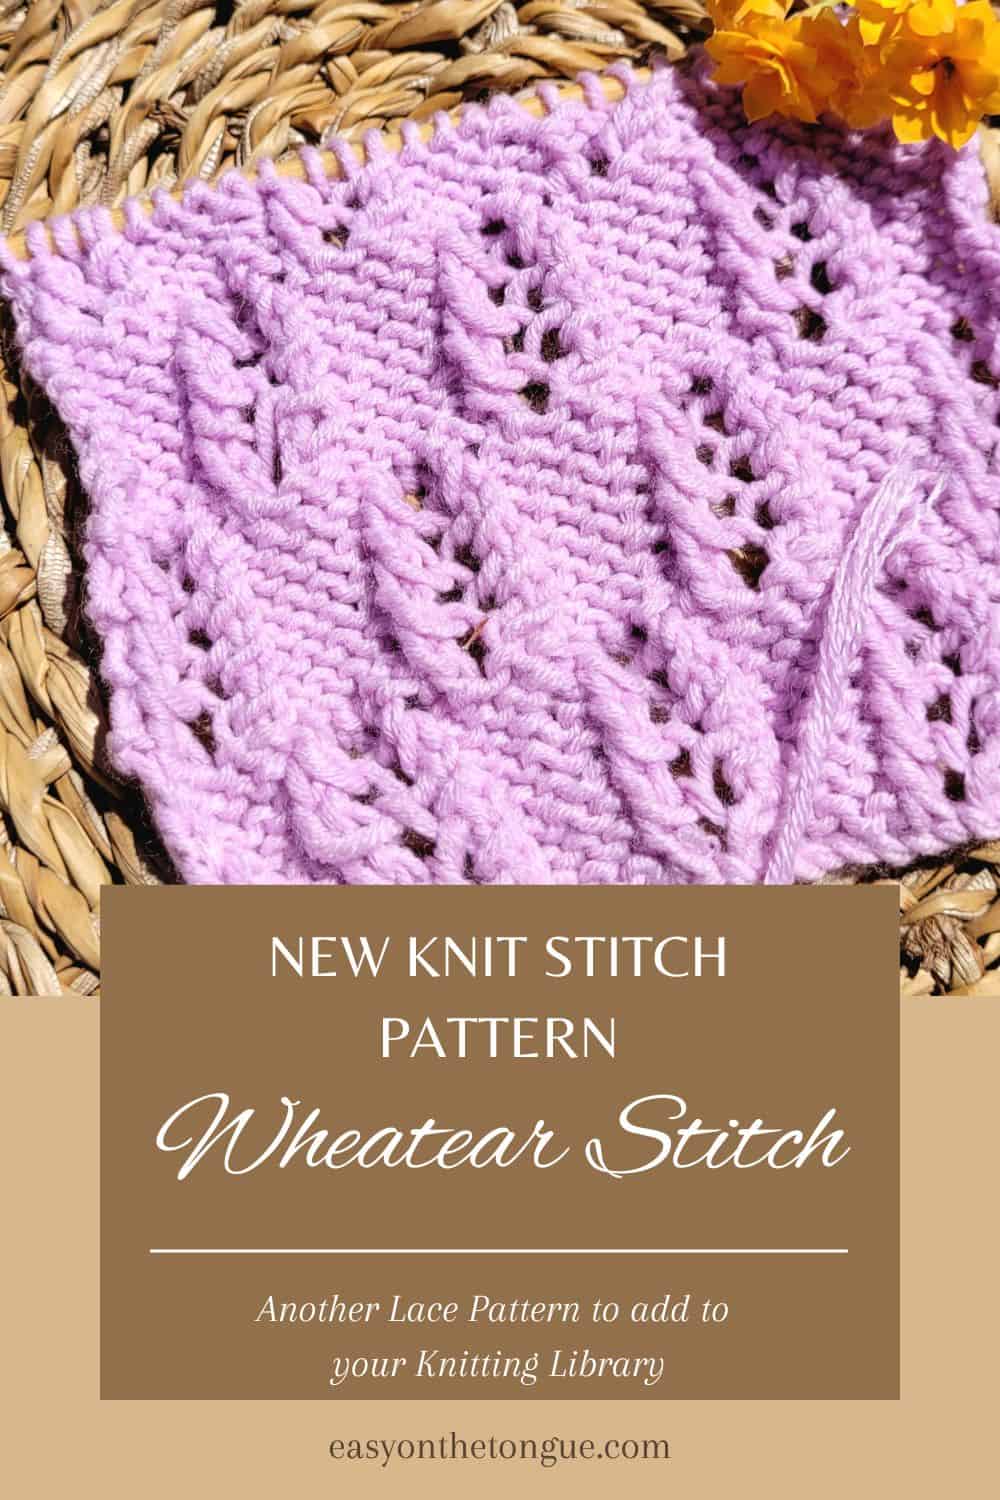 Wheatear Knit stitch pattern by easyonthetongue.com Pinterest How to Knit Wheatear Stitch Pattern, A Textured Lace Stitch